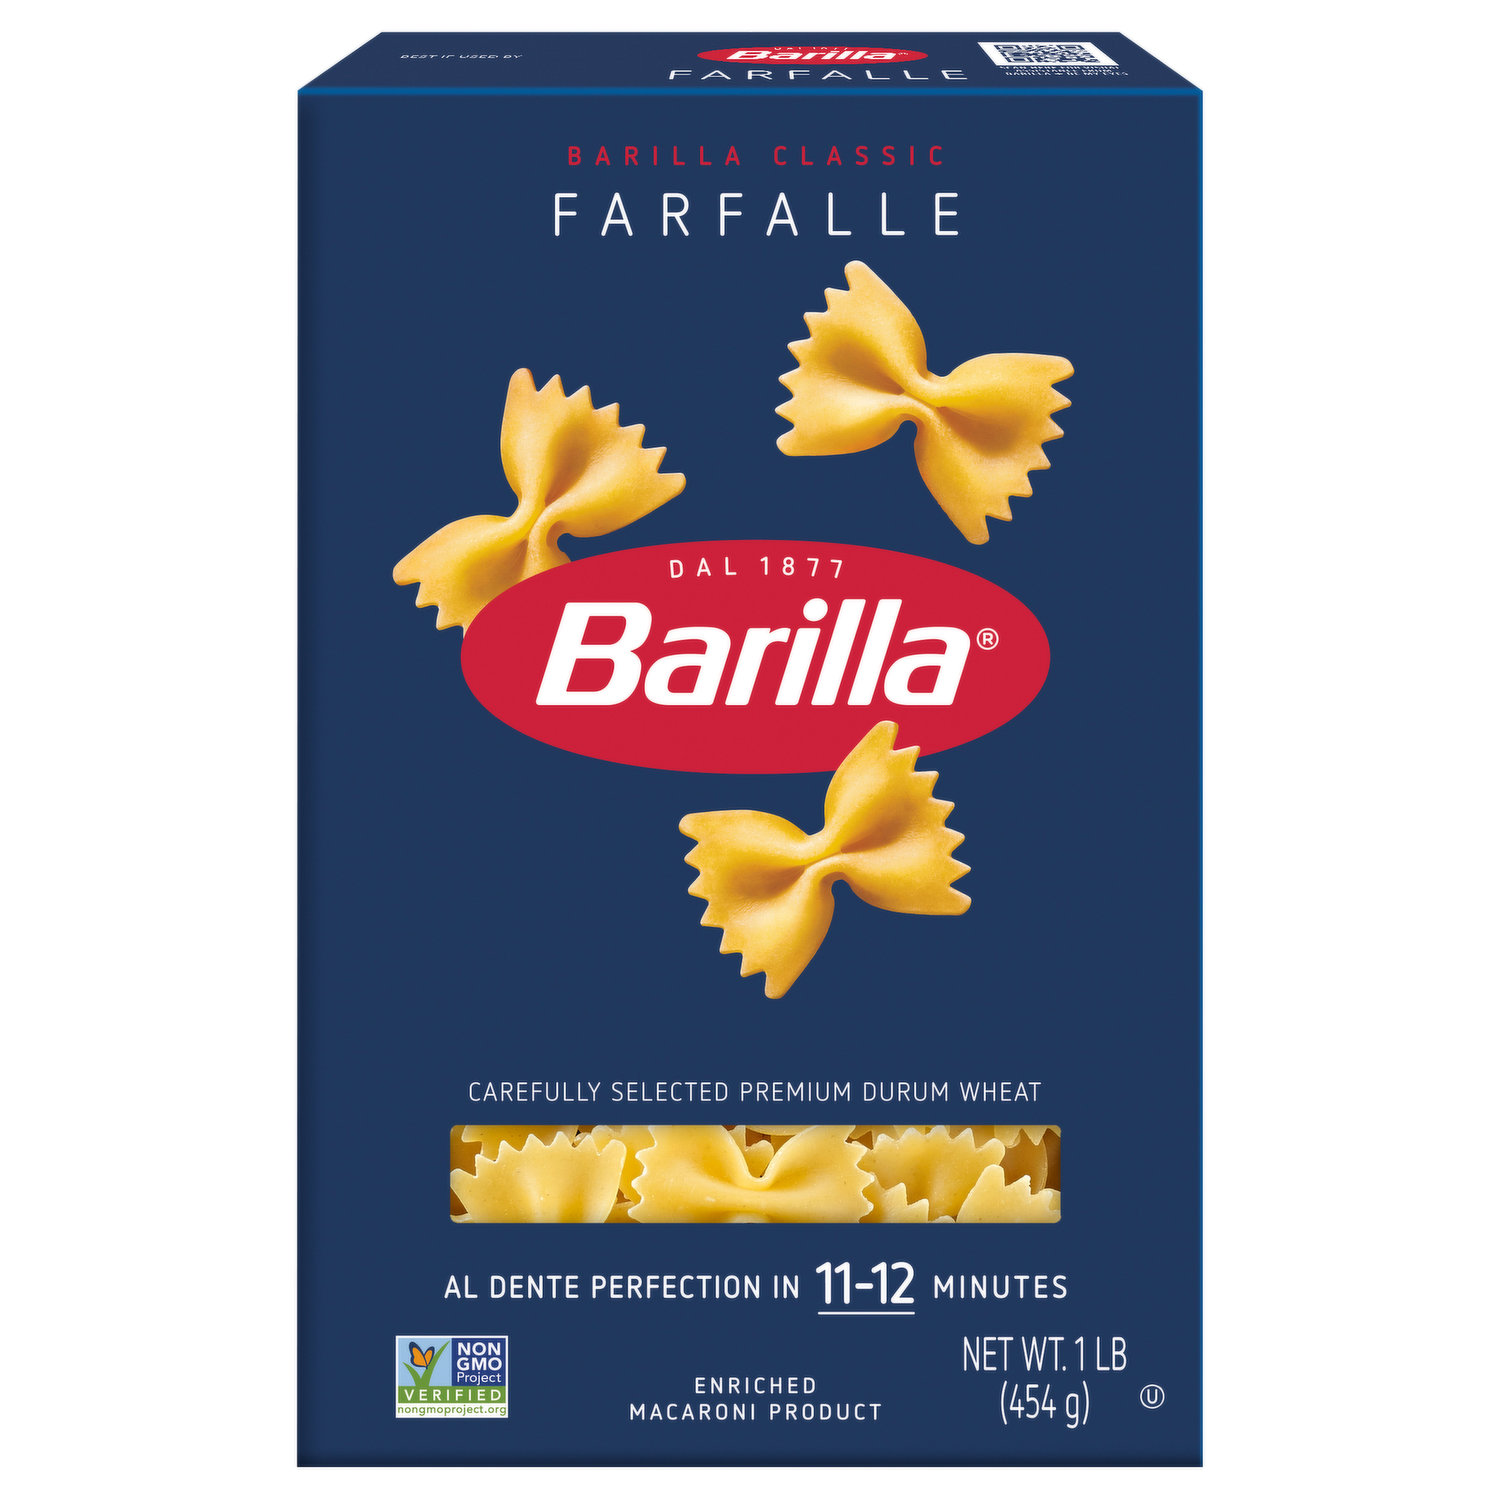 Barilla Classic Farfalle,